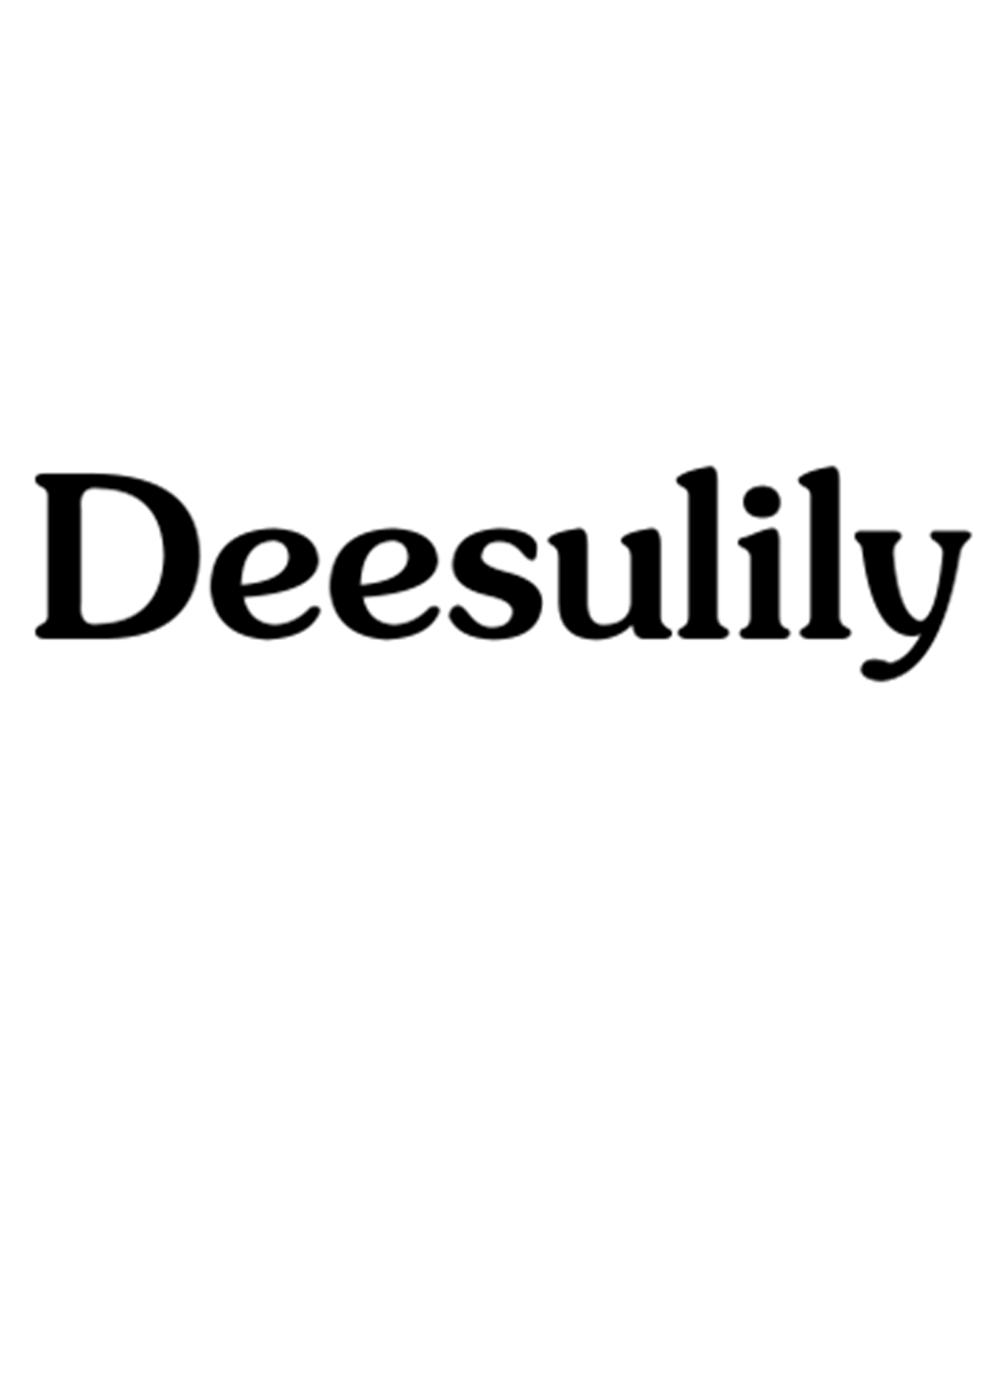 DEESULILY